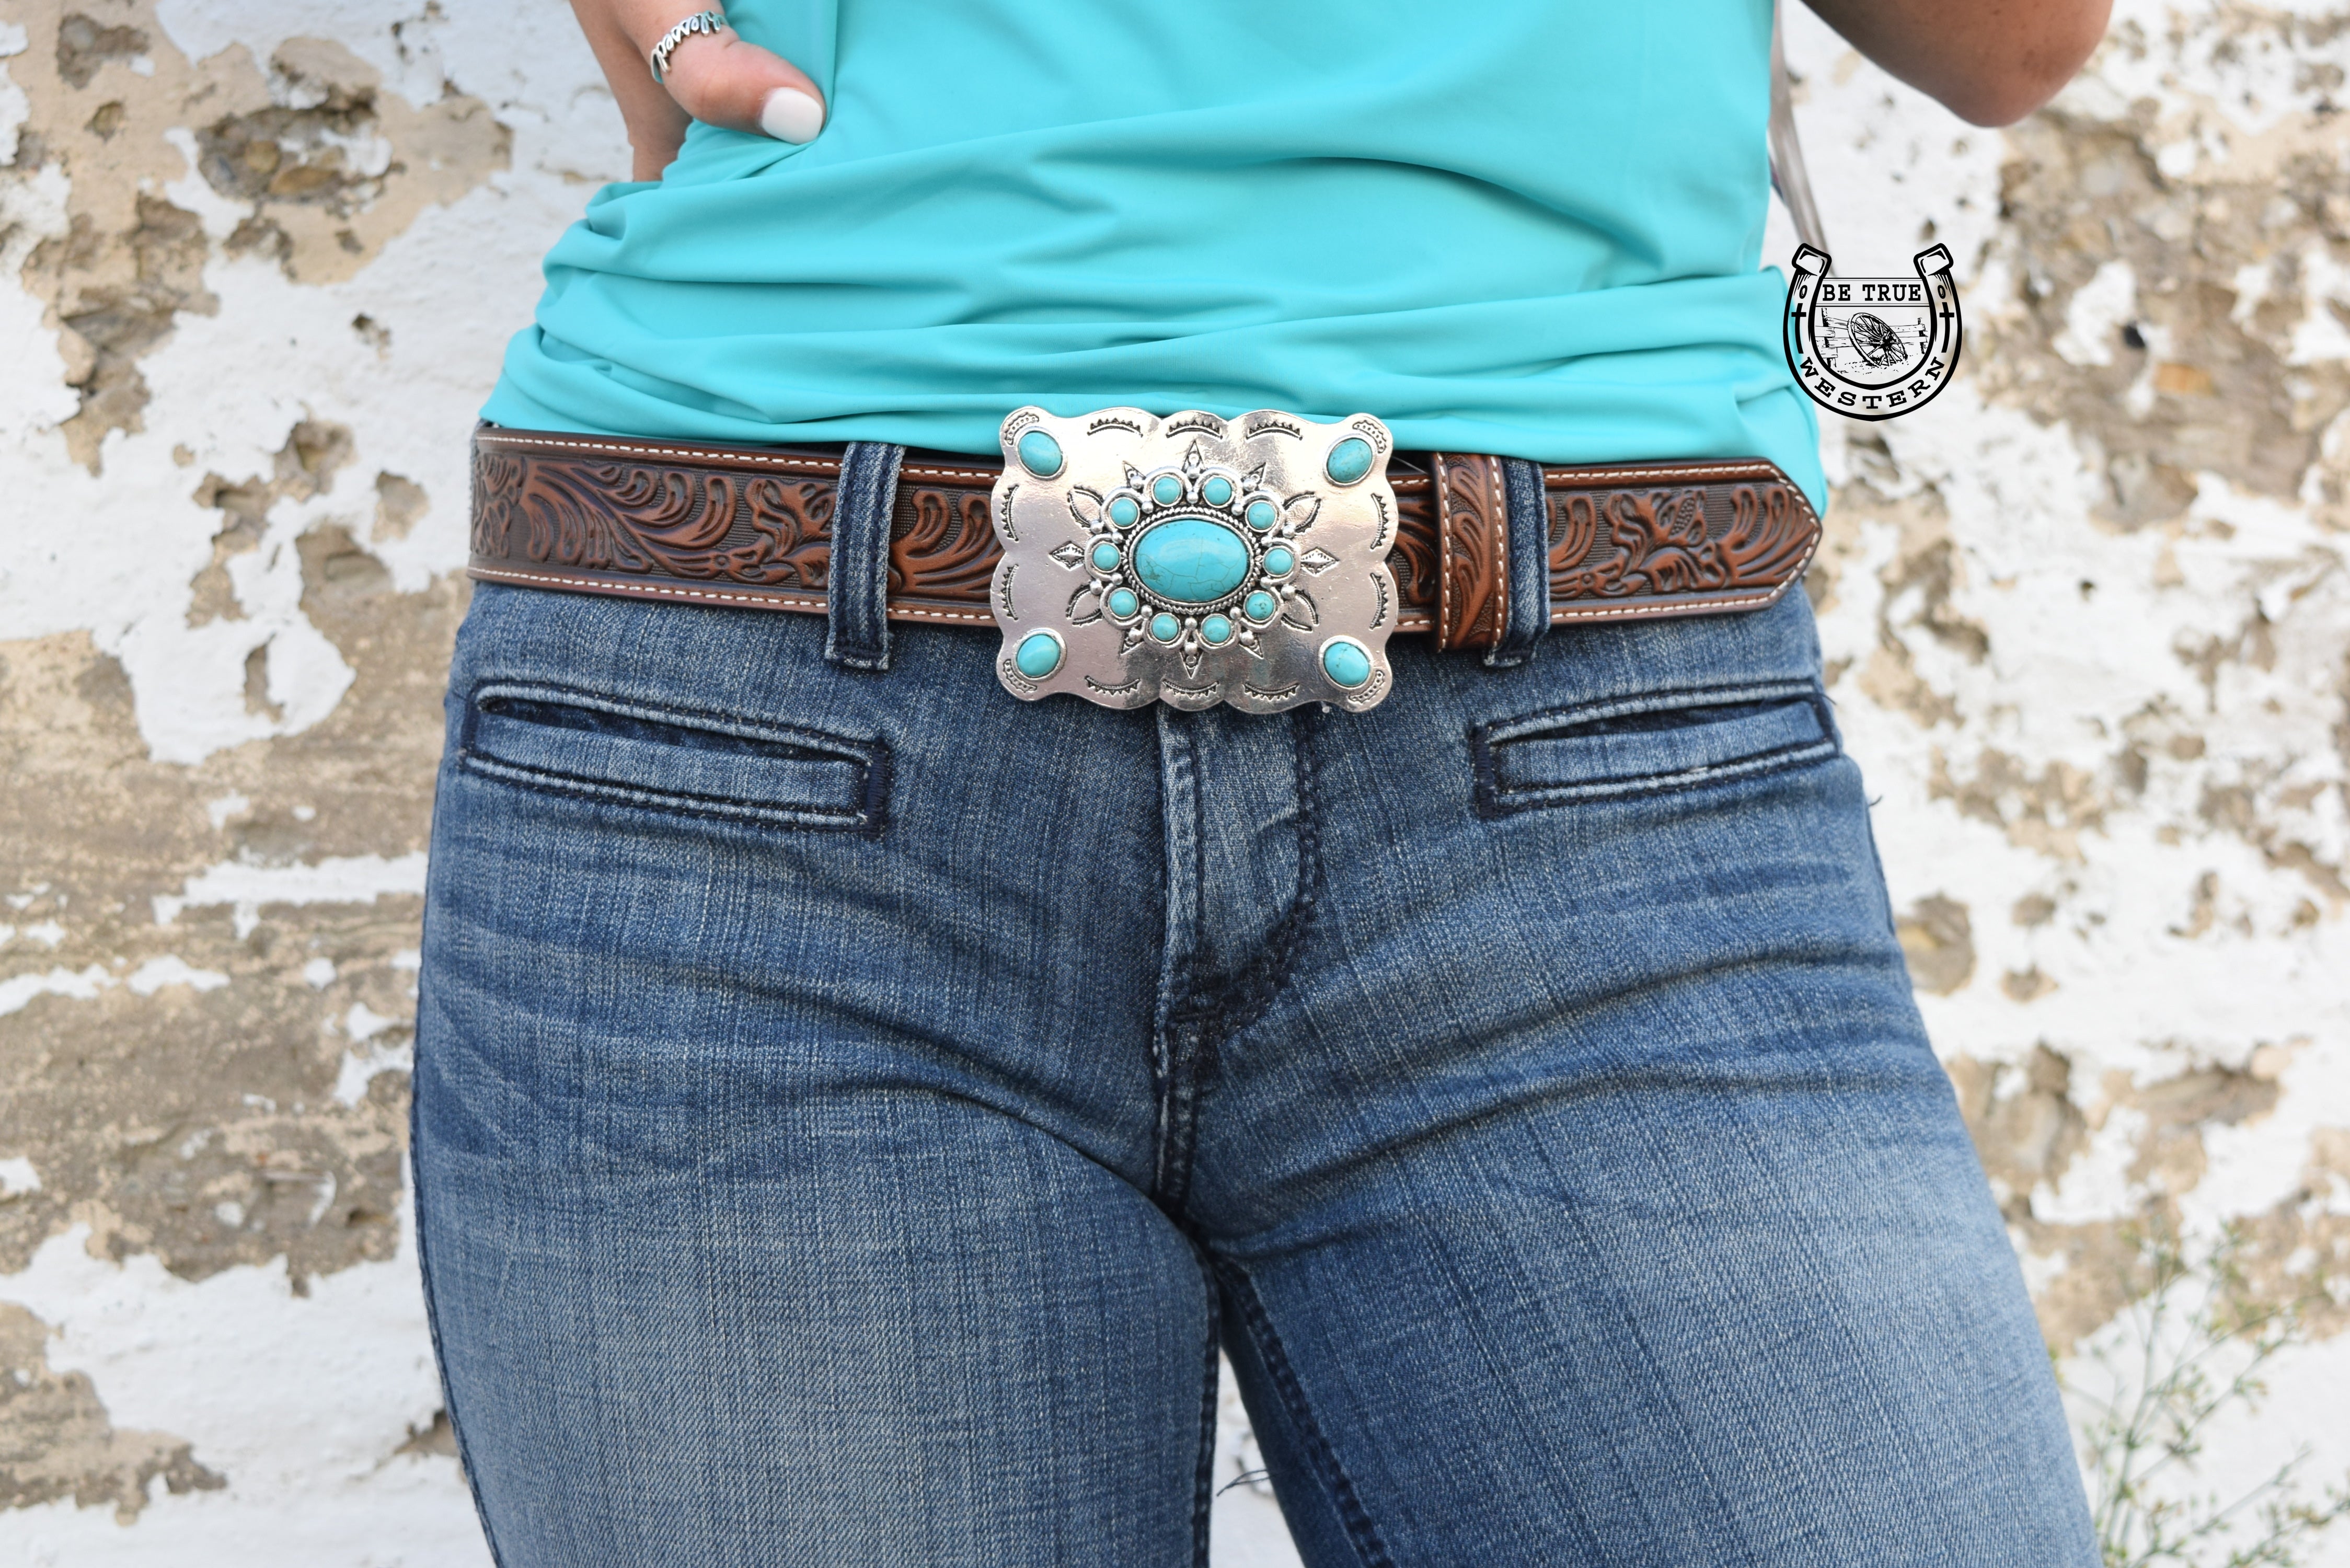 cowboy belt buckle